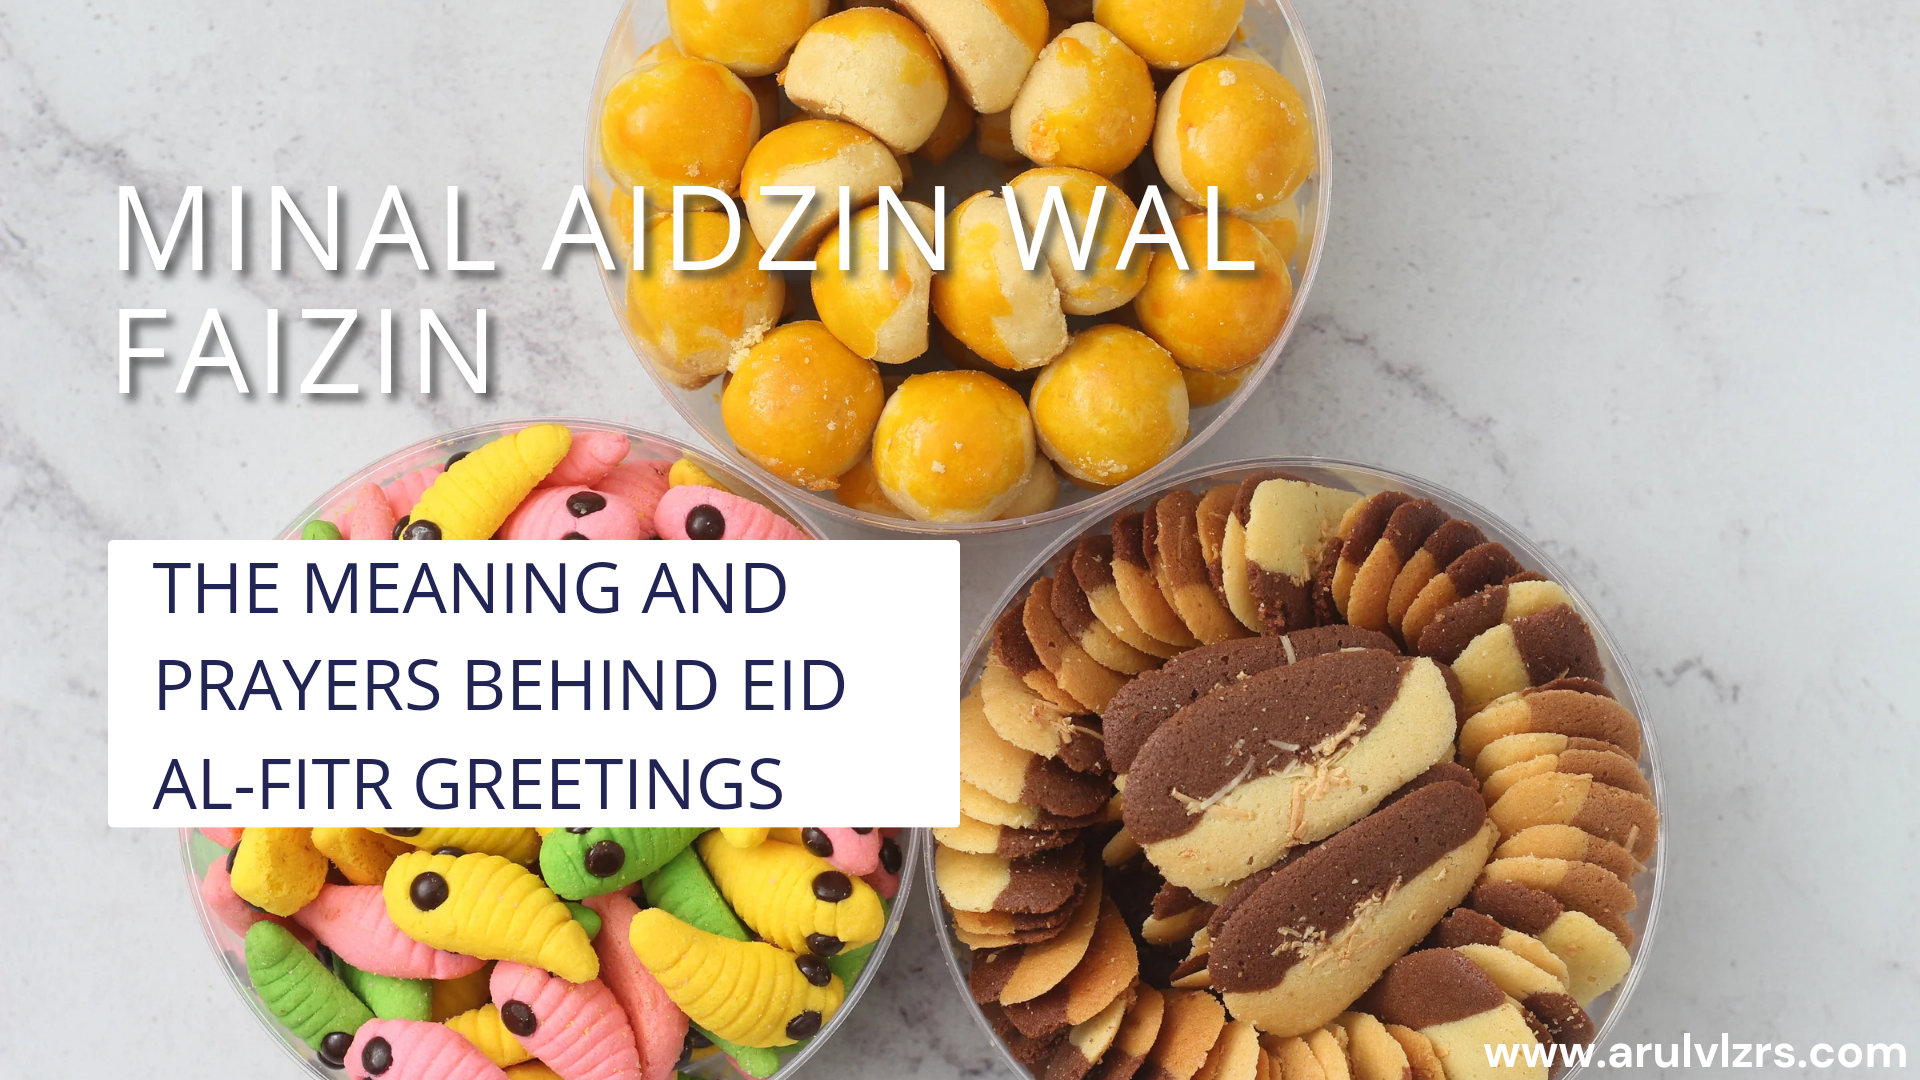 Minal Aidzin Wal Faizin: The Meaning and Prayers Behind Eid Al-Fitr Greetings